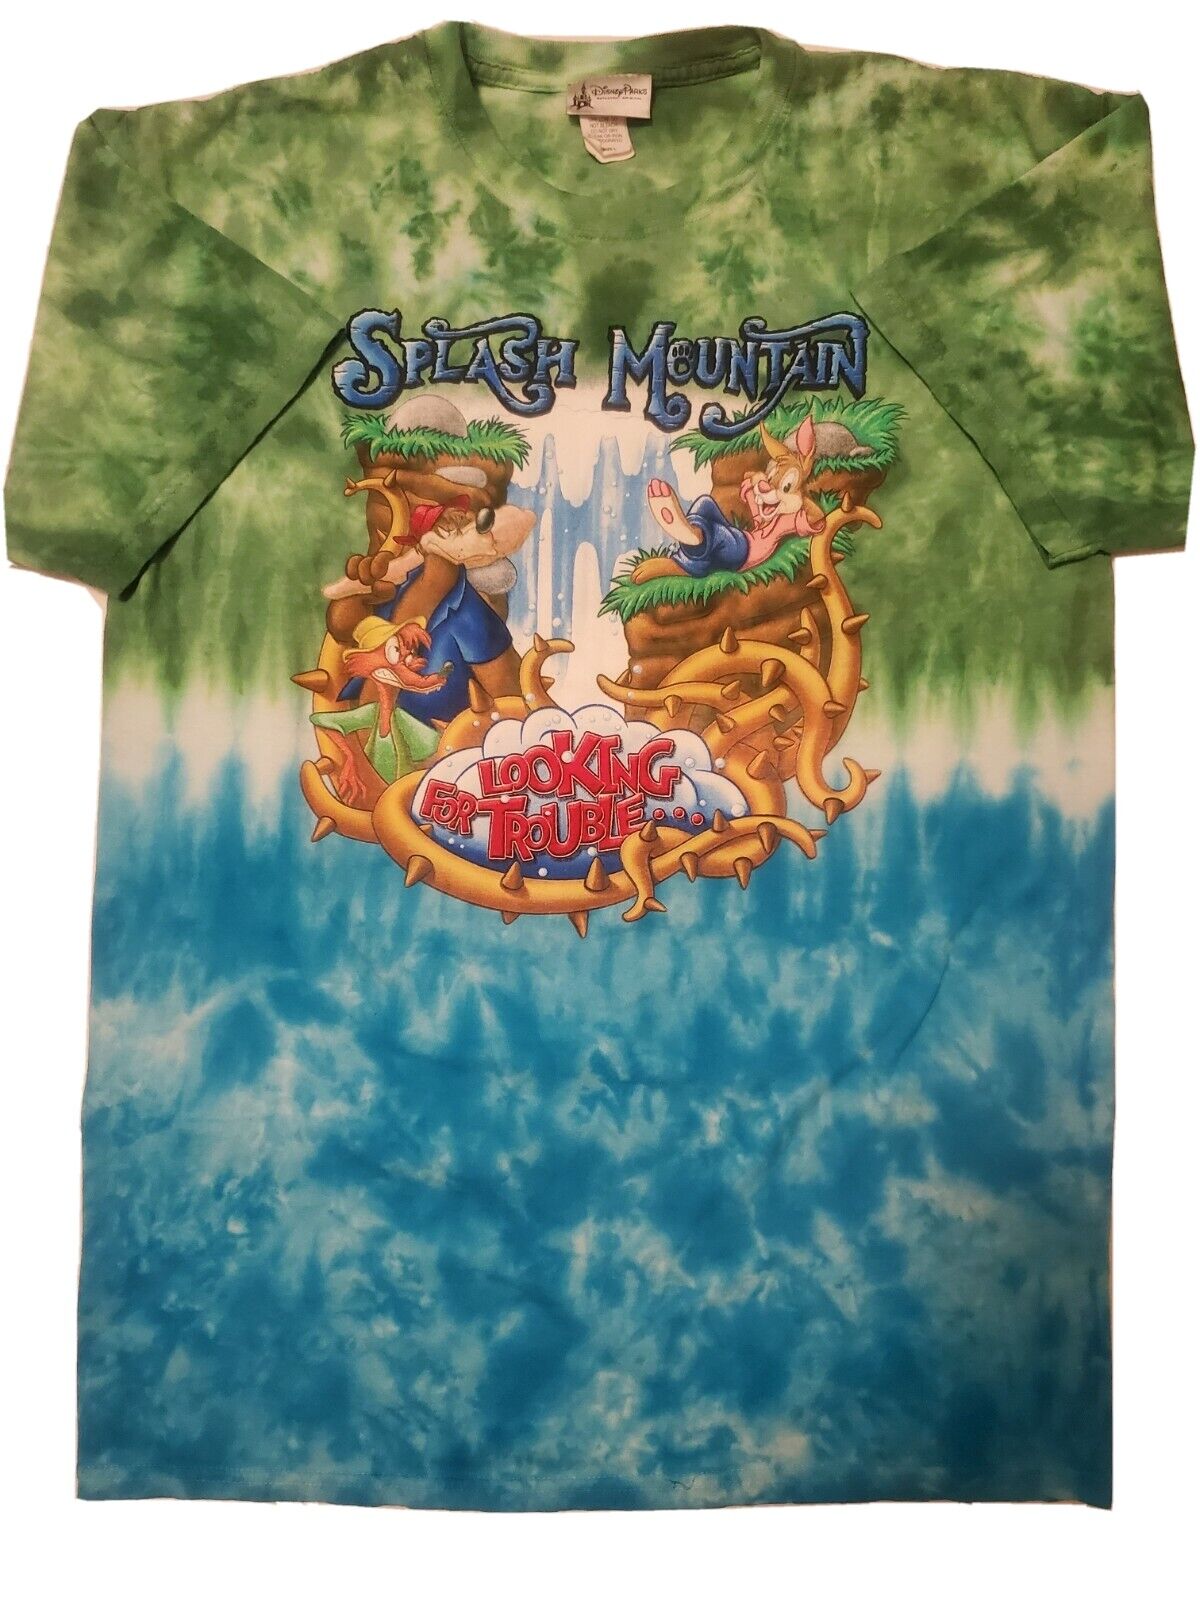 Disney Splash Mountain Adult Sz L Green Blue Tye-Dye T-Shirt Looking For Trouble